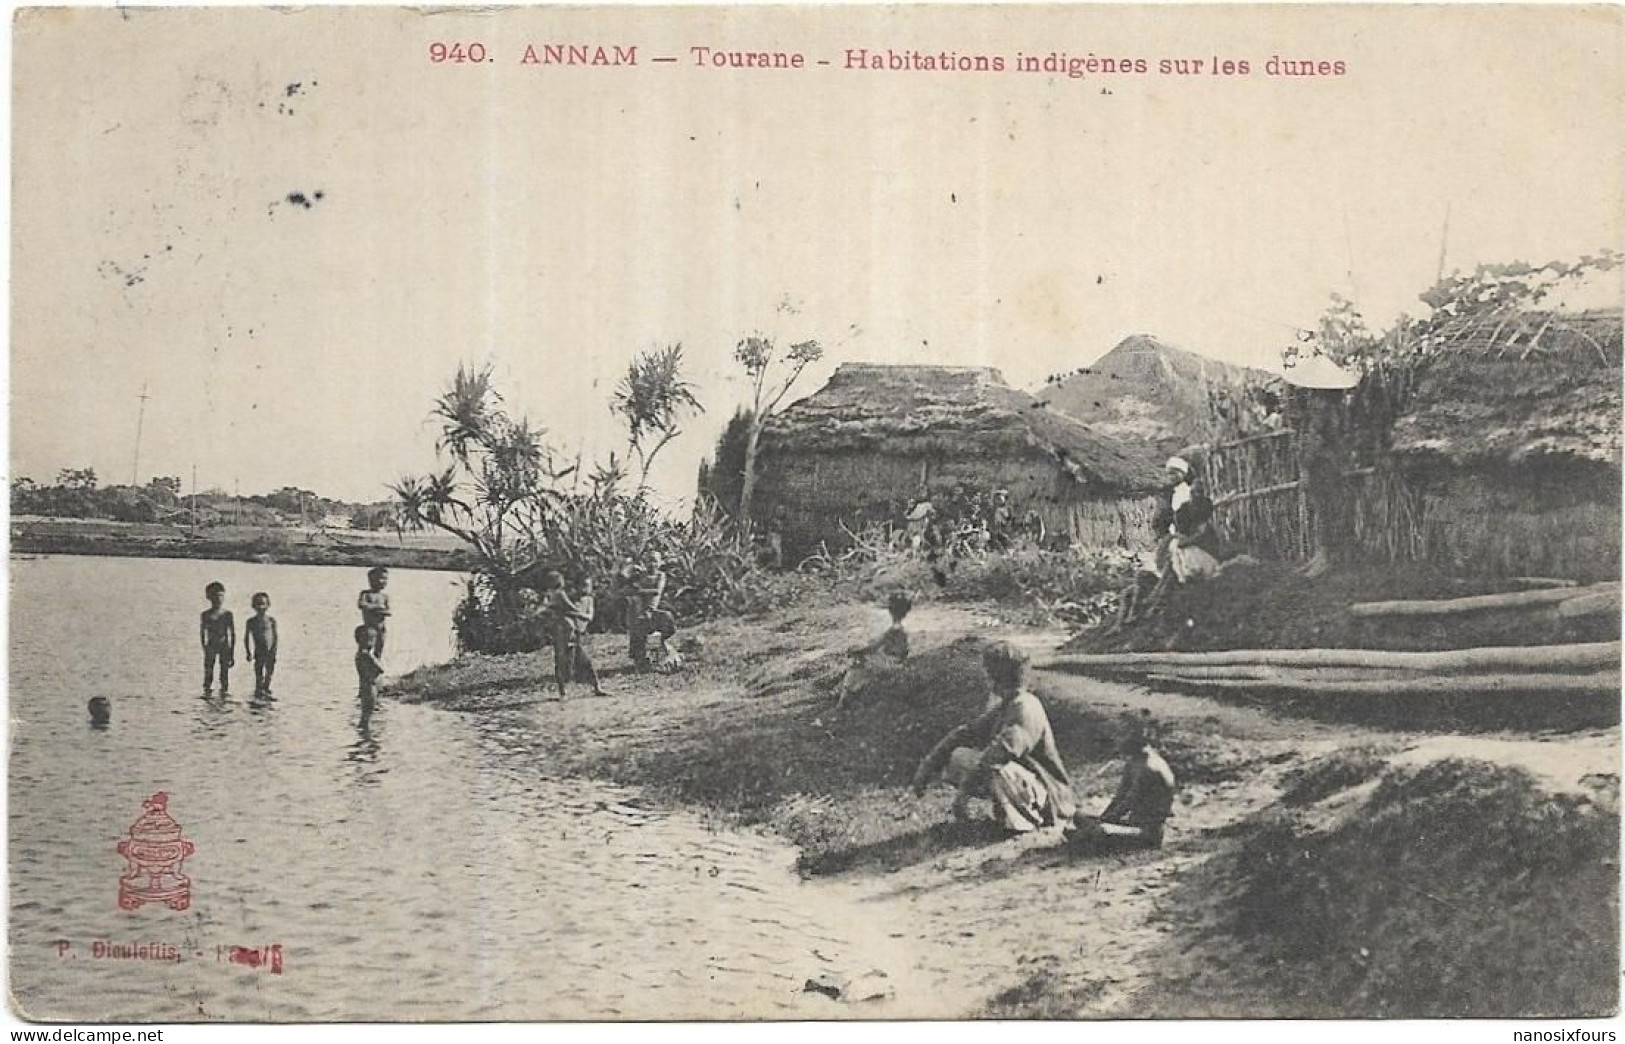 VIET NAM.   ANNAM. TOURANE  HABITATIONS INDIGENES SUR LES DUNES - Viêt-Nam